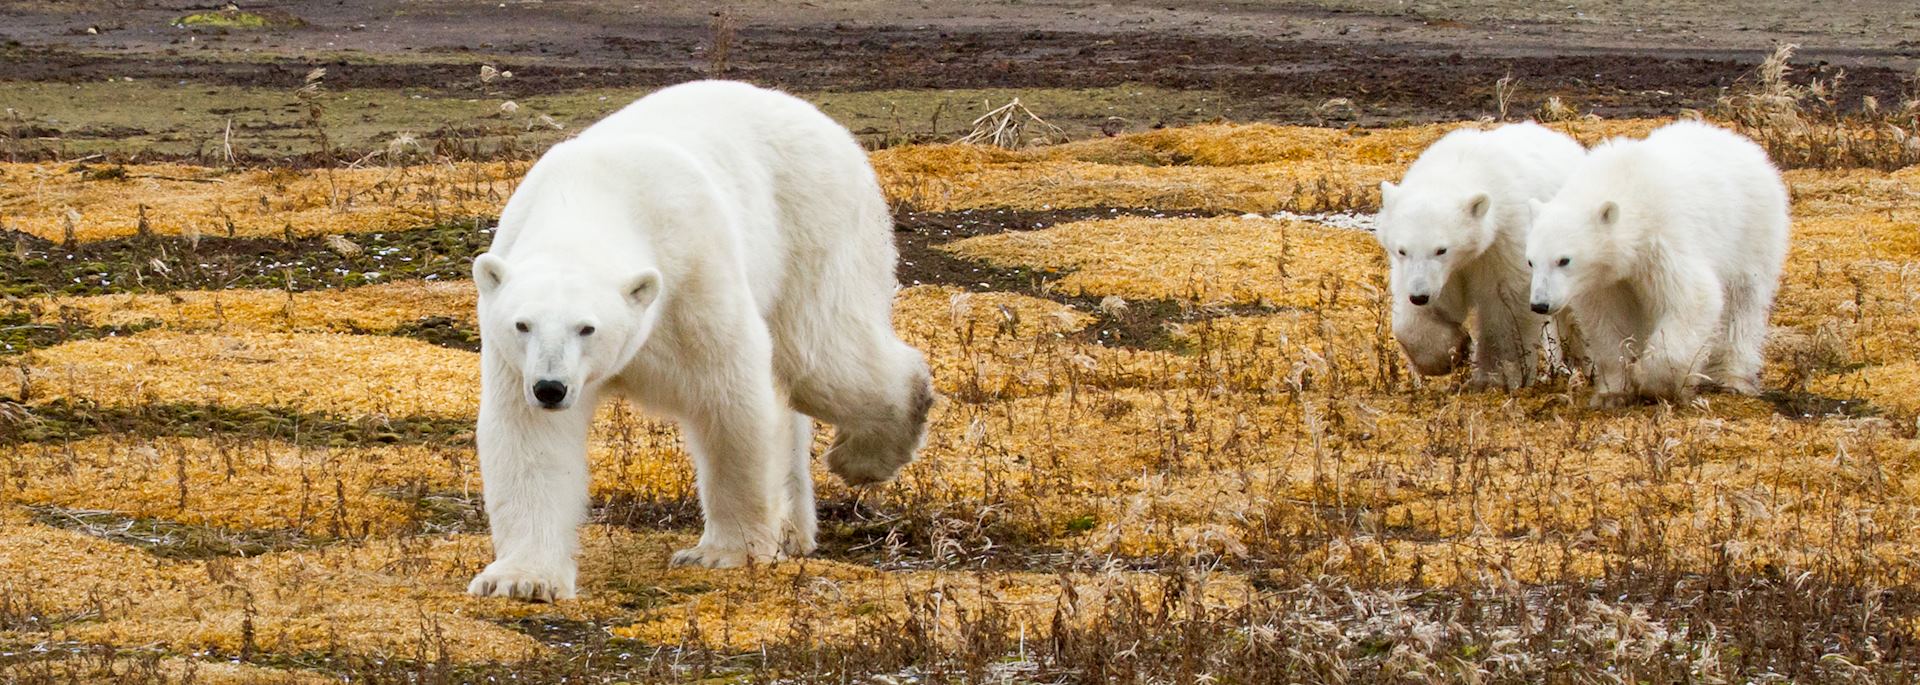 Polar bears in Churchill, Manitoba 